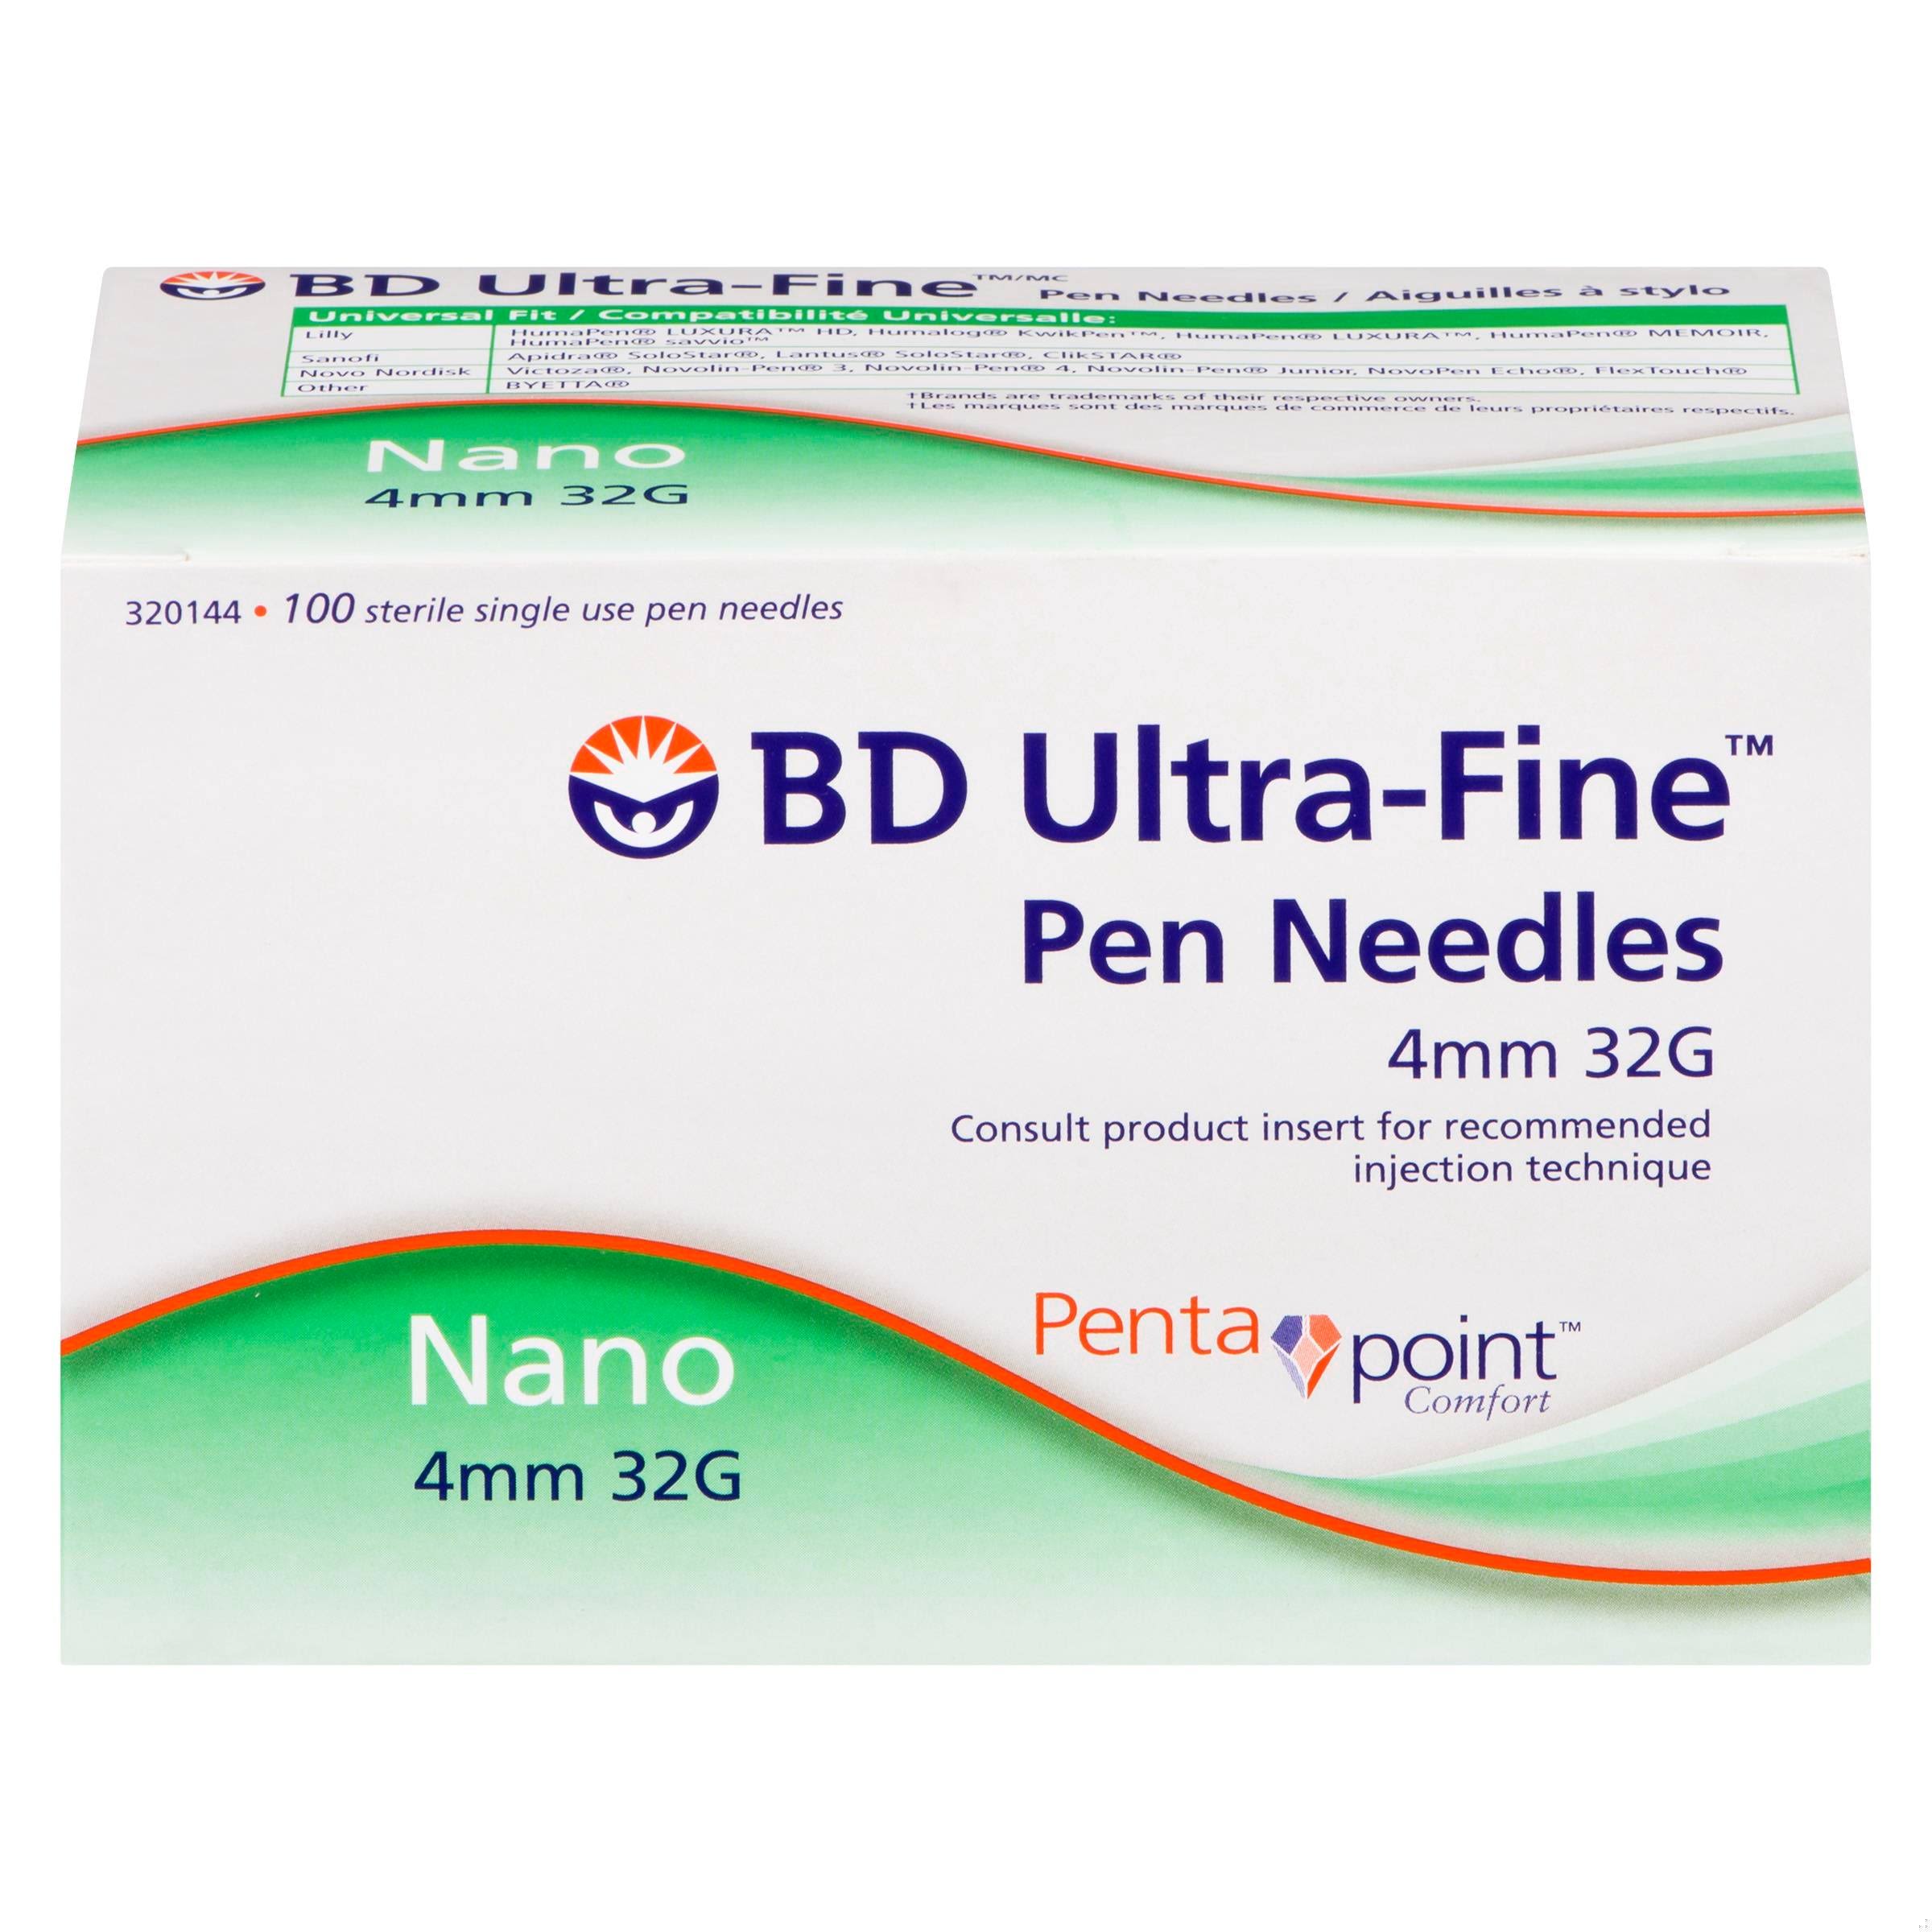 BD Ultra Fine Pen Needles - Nano 4mm, 32g